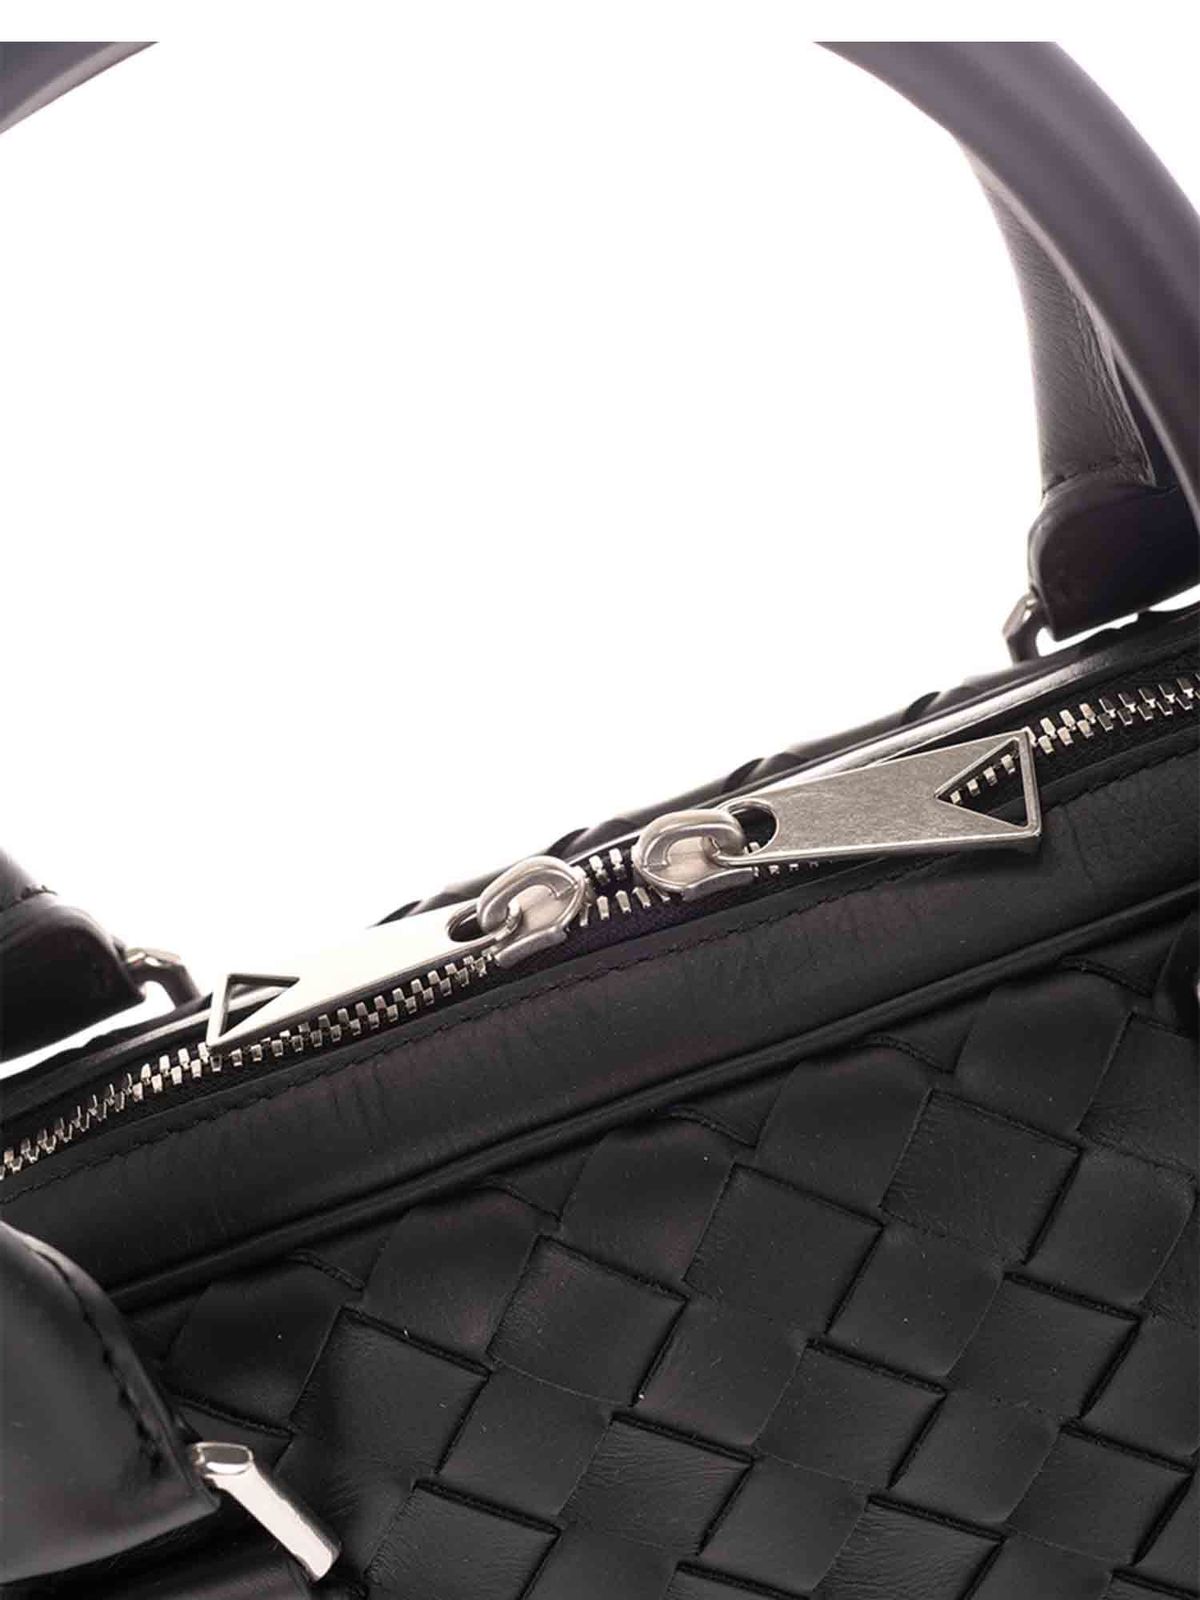 Bottega Veneta Intrecciato Woven Leather Men Briefcase Business Bag Black  NEW